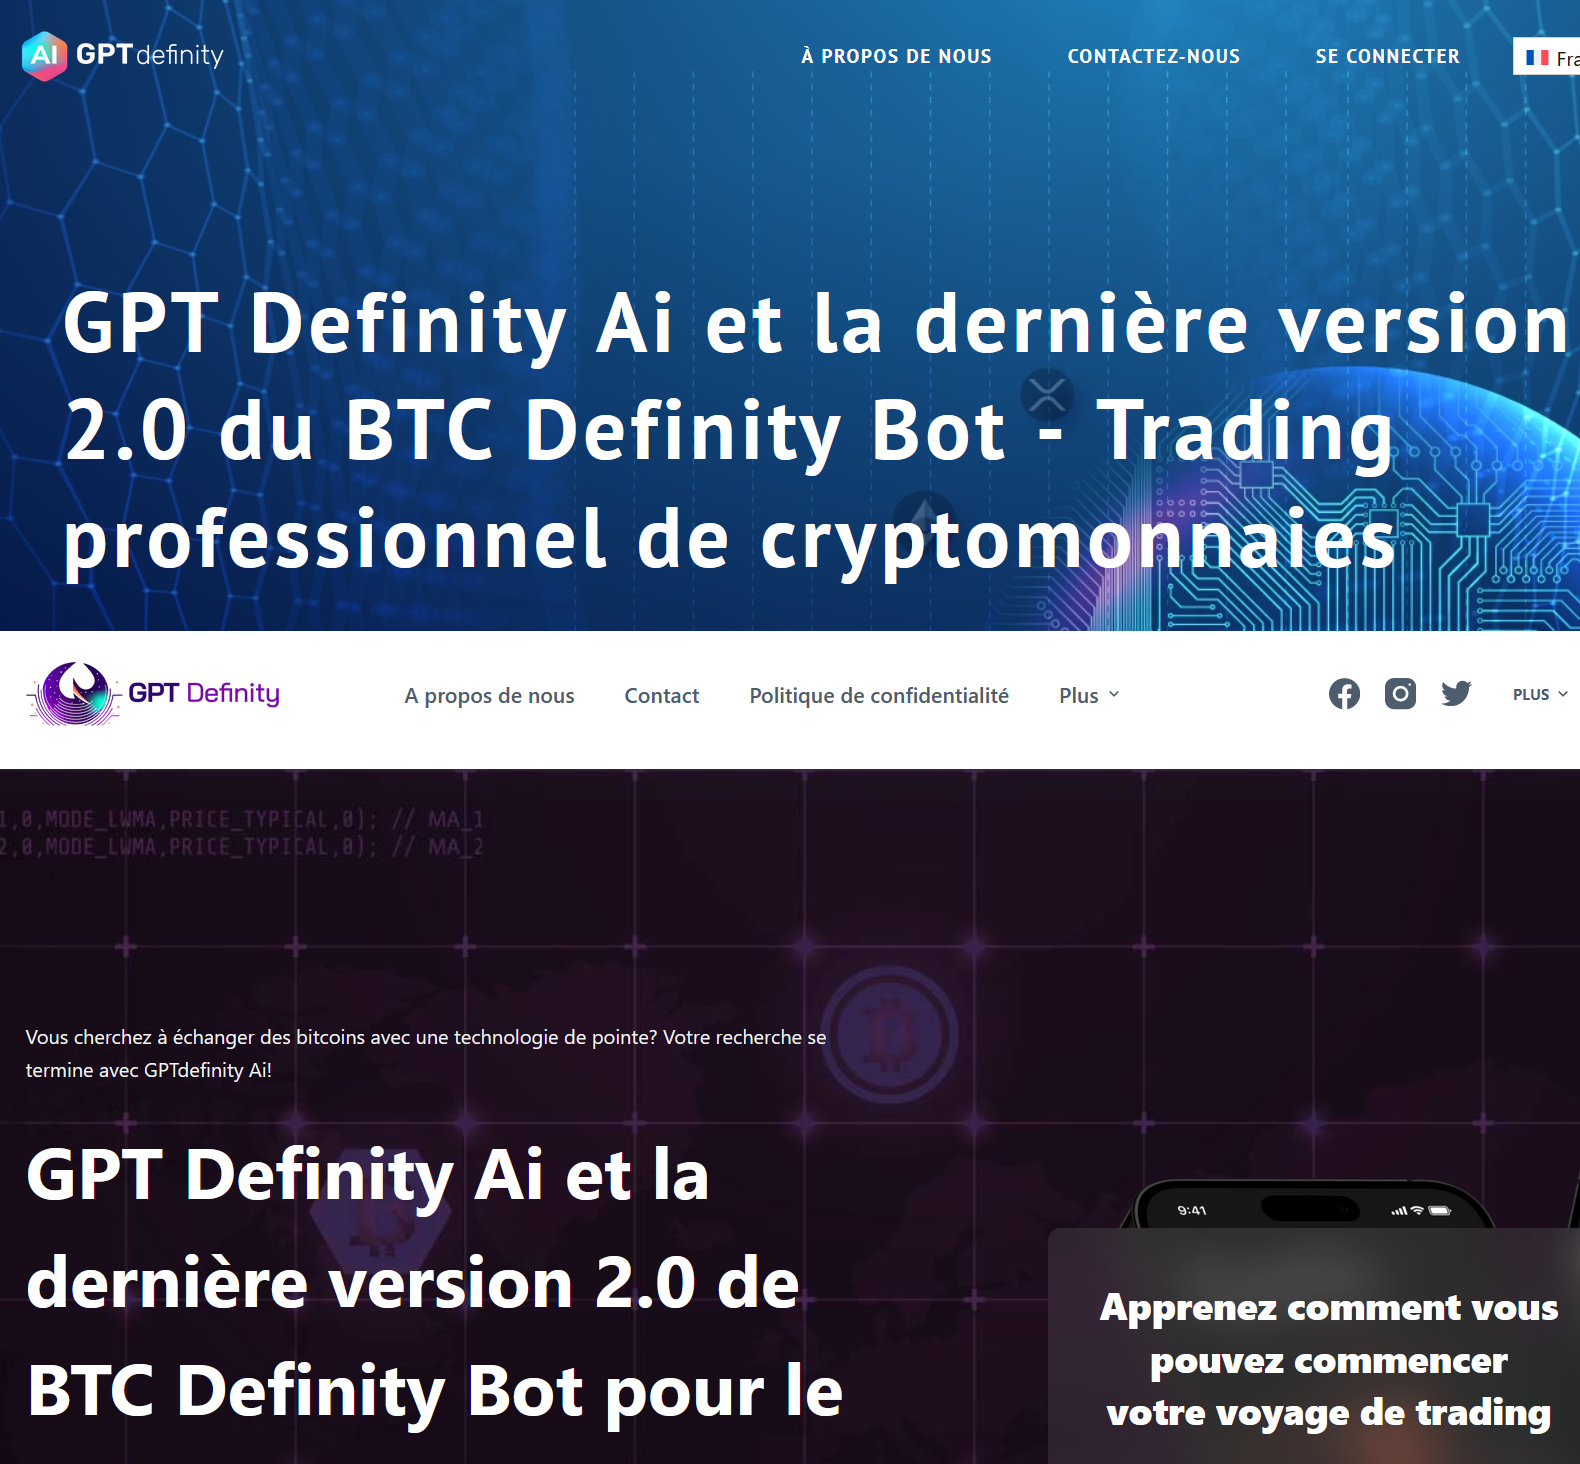 GPT Definity sites arnaque